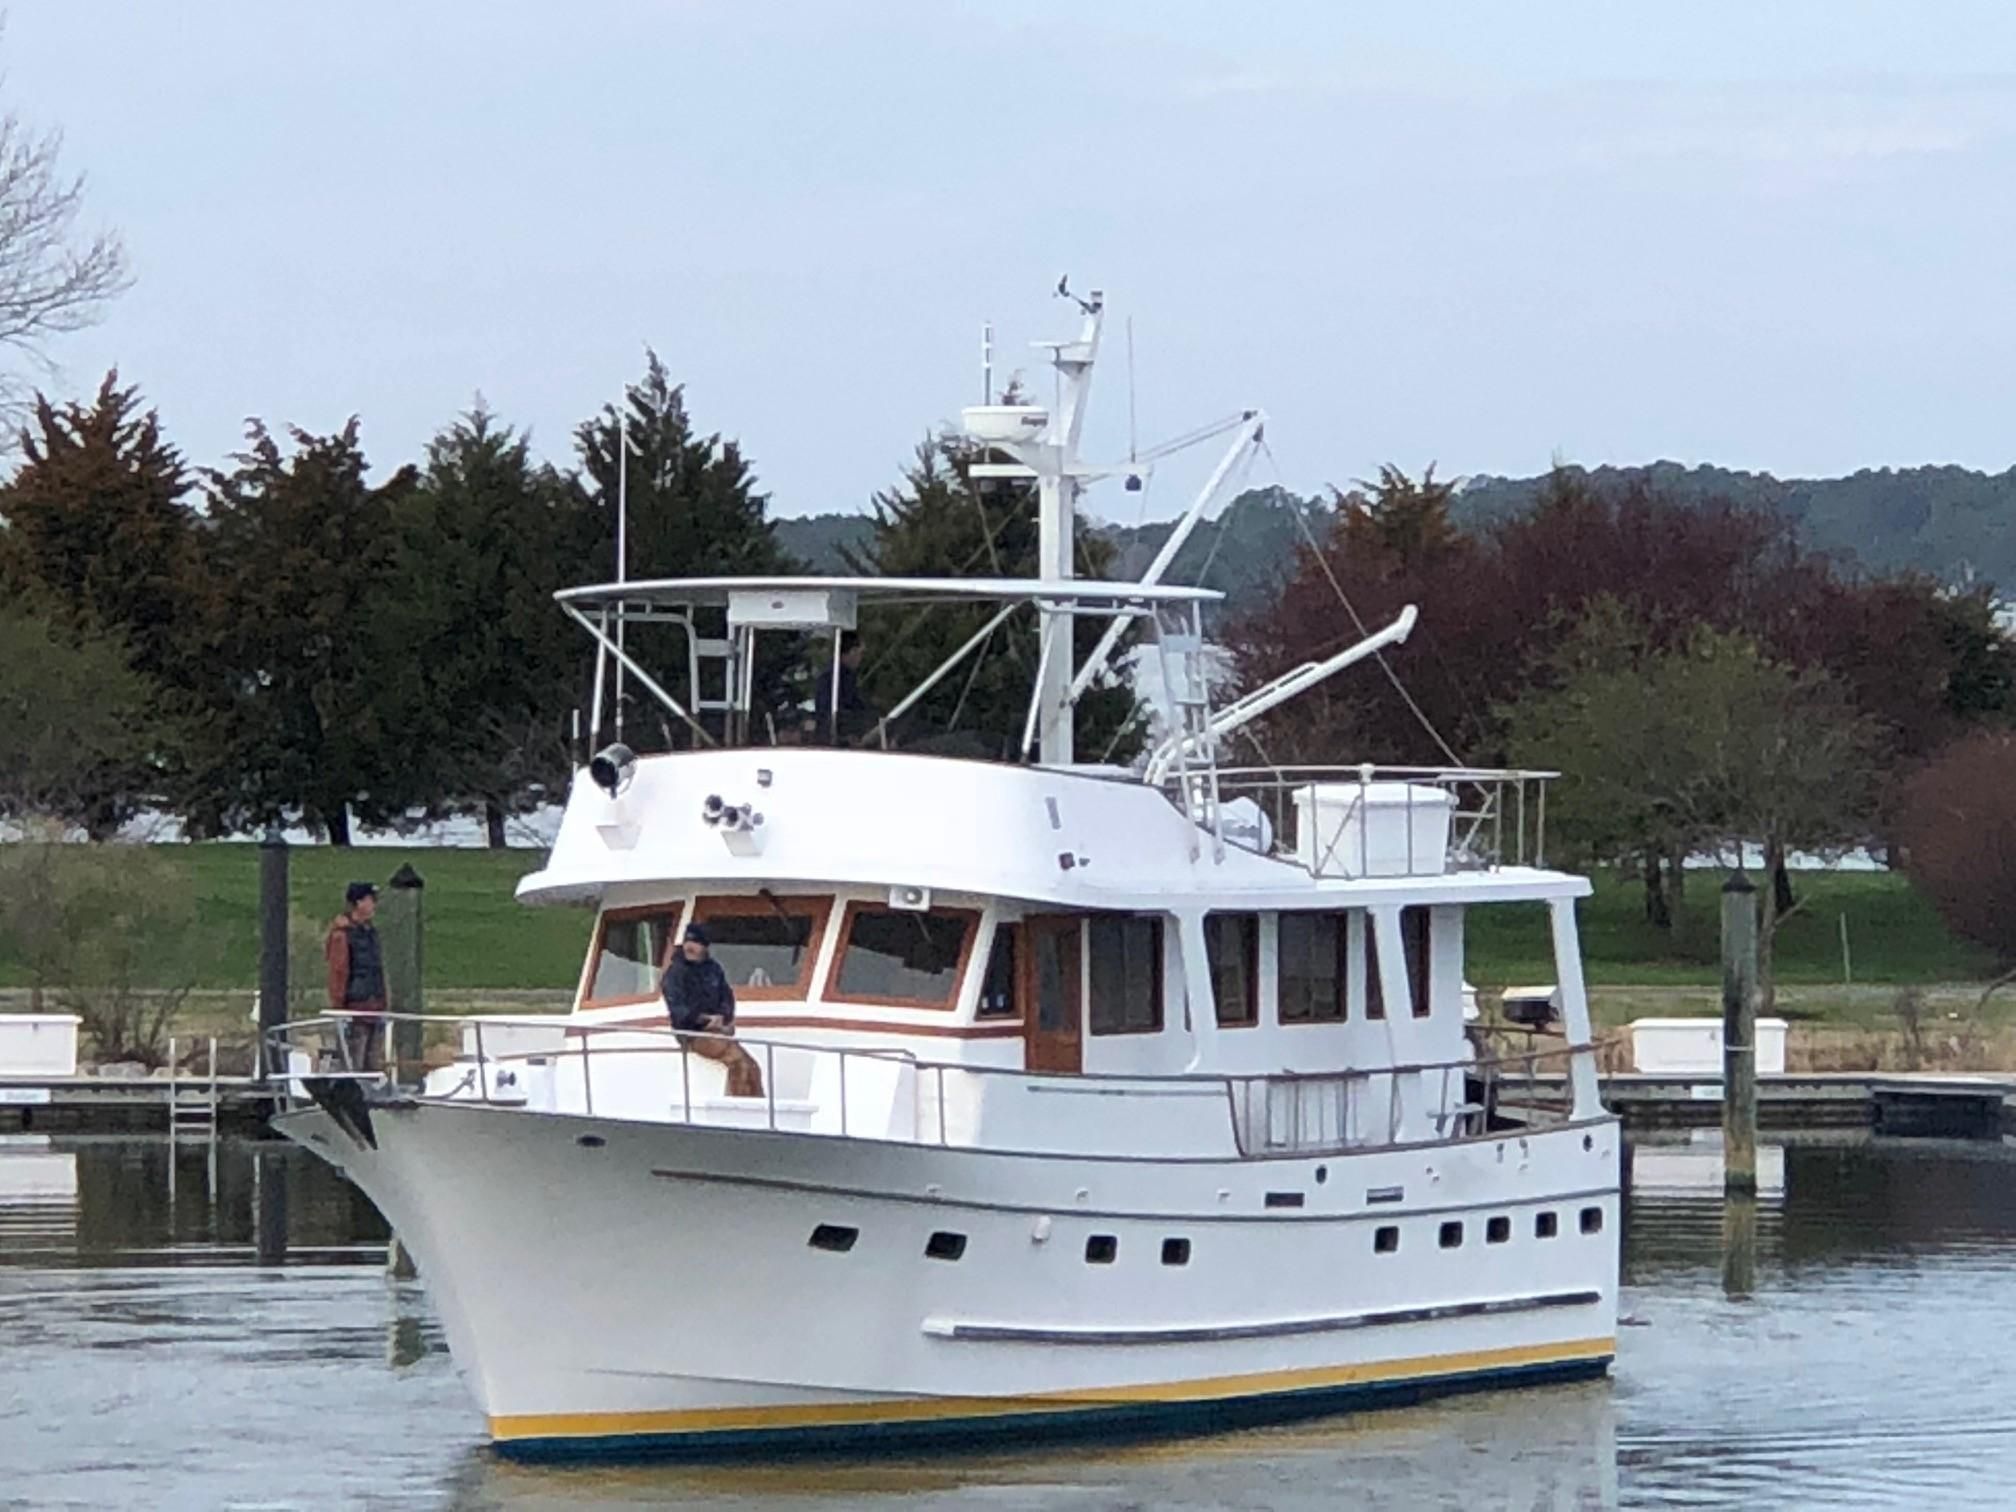 50' marine trader motor yacht